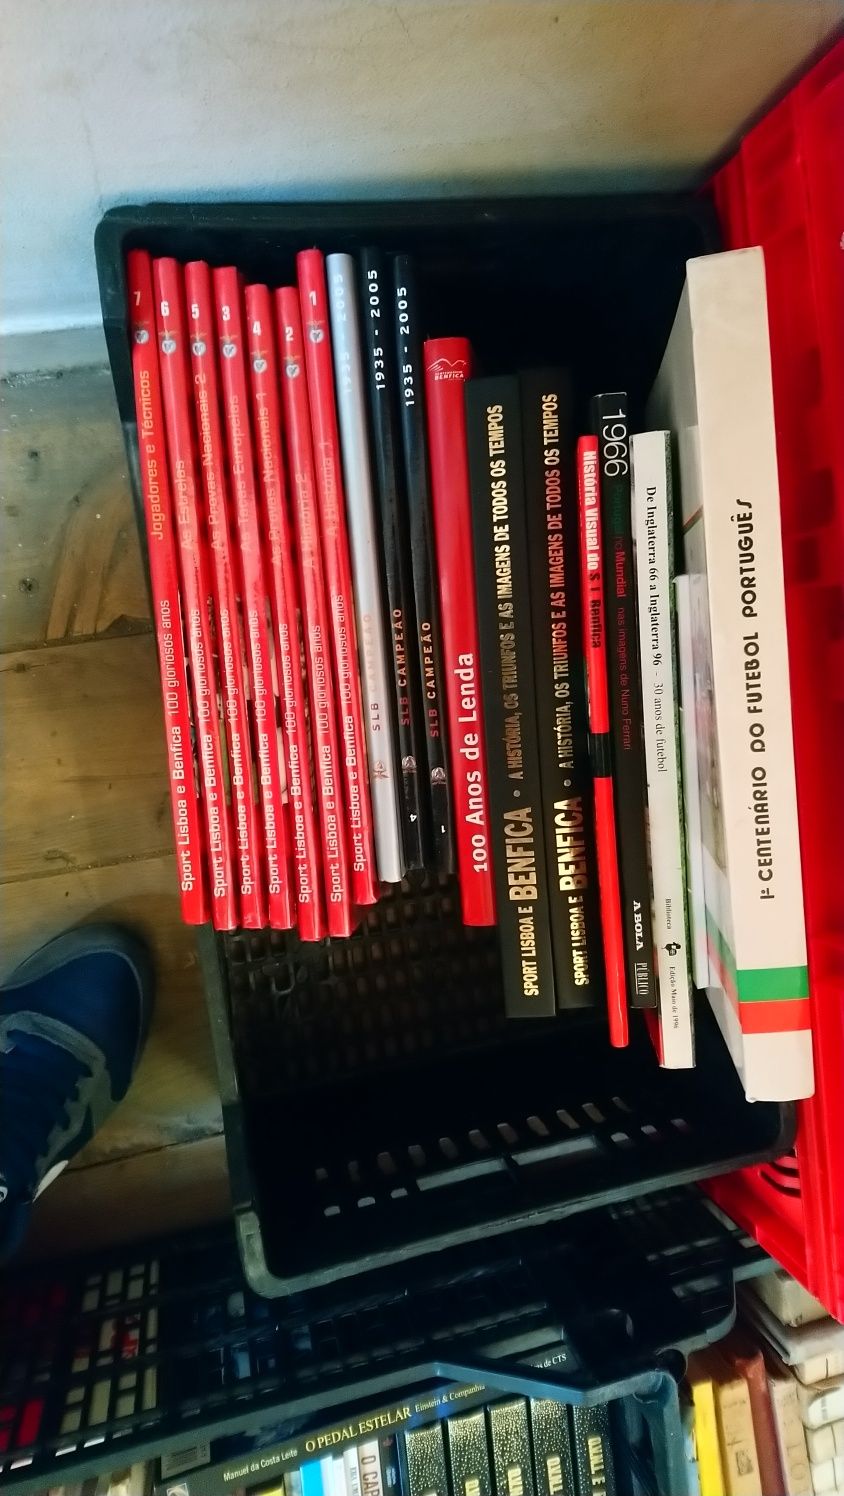 Conjunto / lote de livros sobre o Sport Lisboa e Benfica.